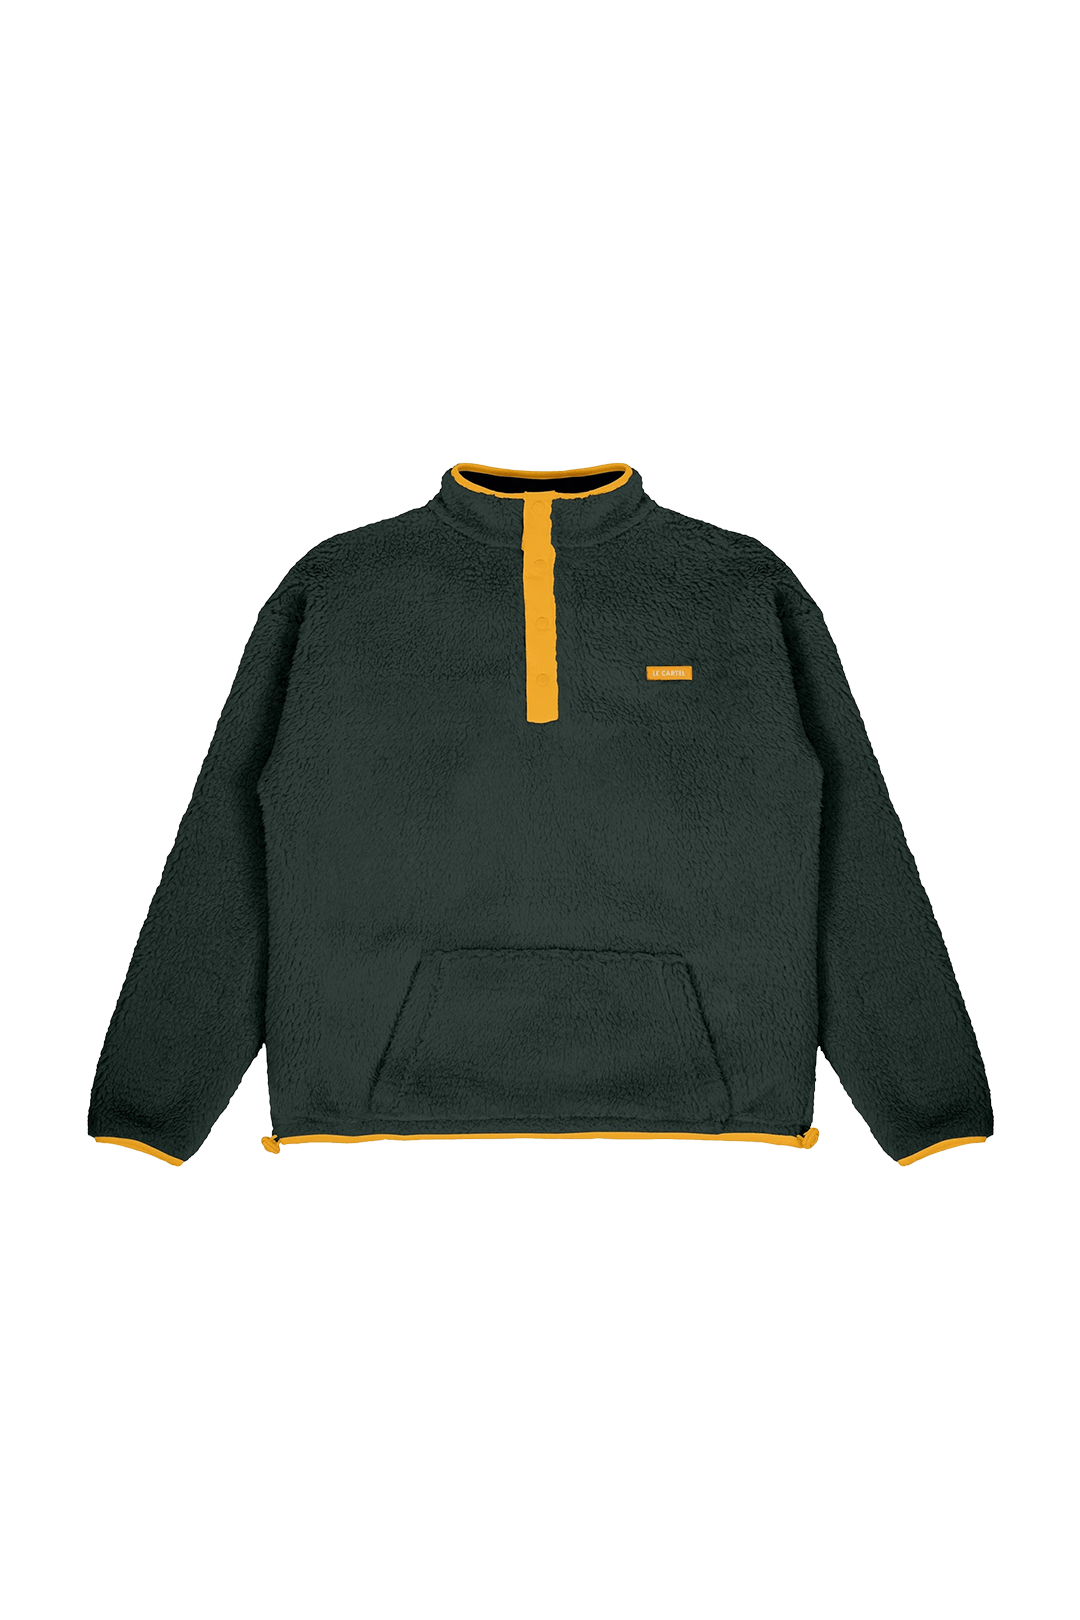 FUTURA・Jacket Sherpa・Green